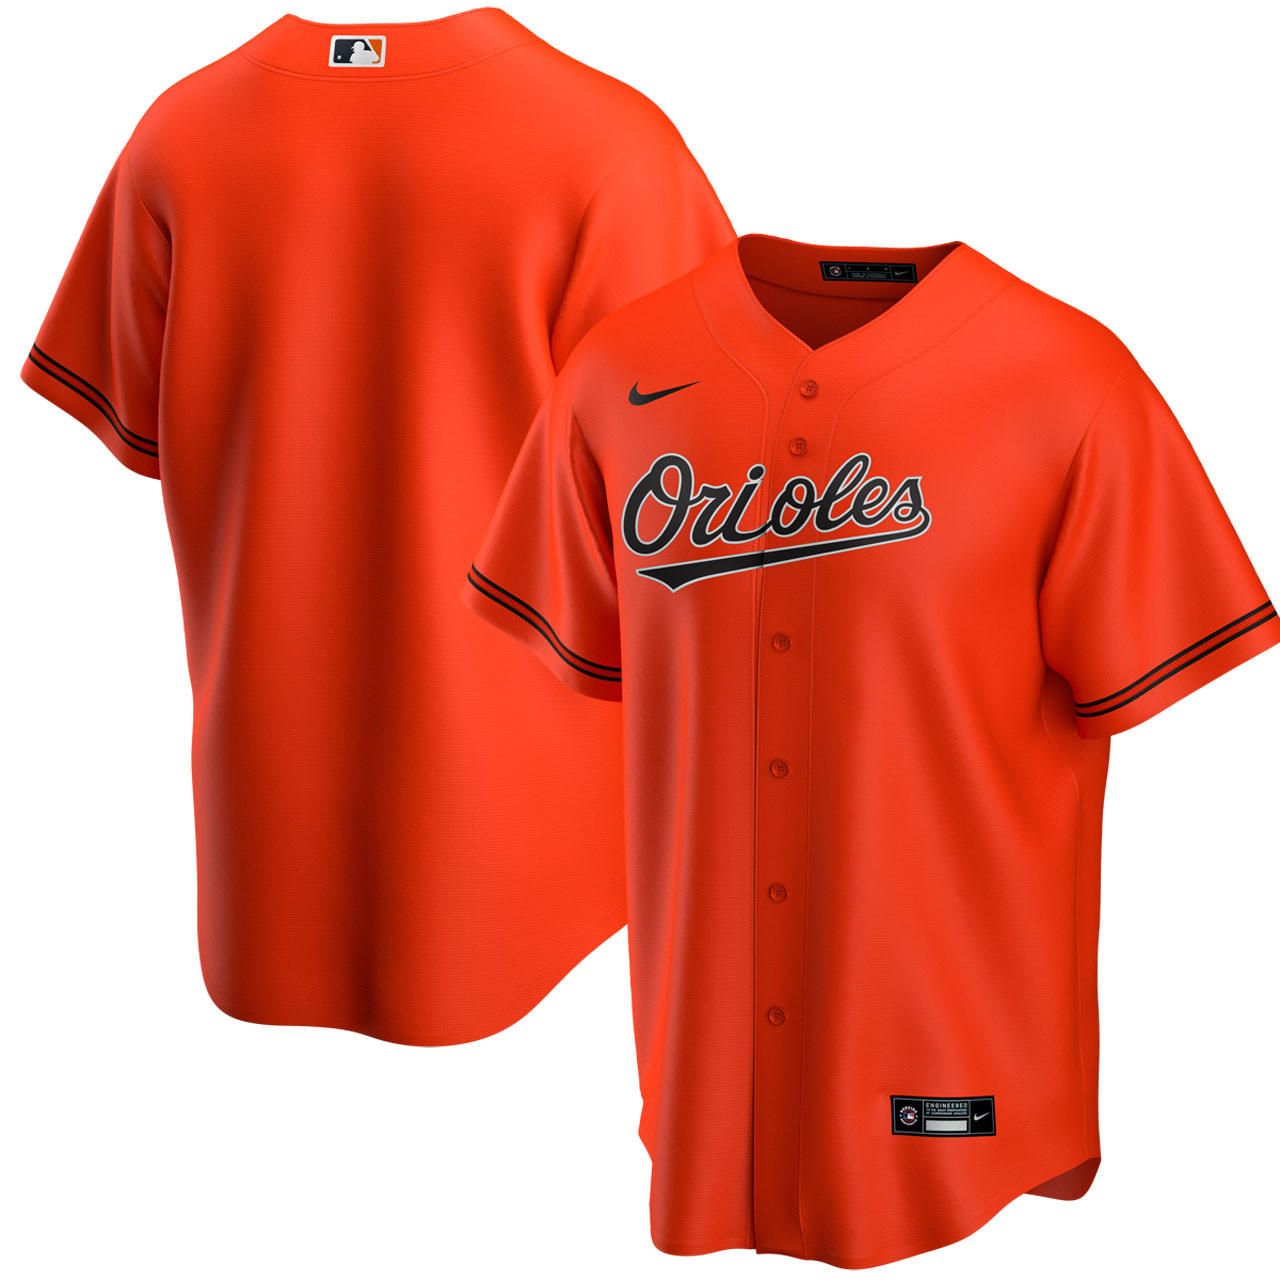 Baltimore Orioles Orange Alternate Jersey by Nike